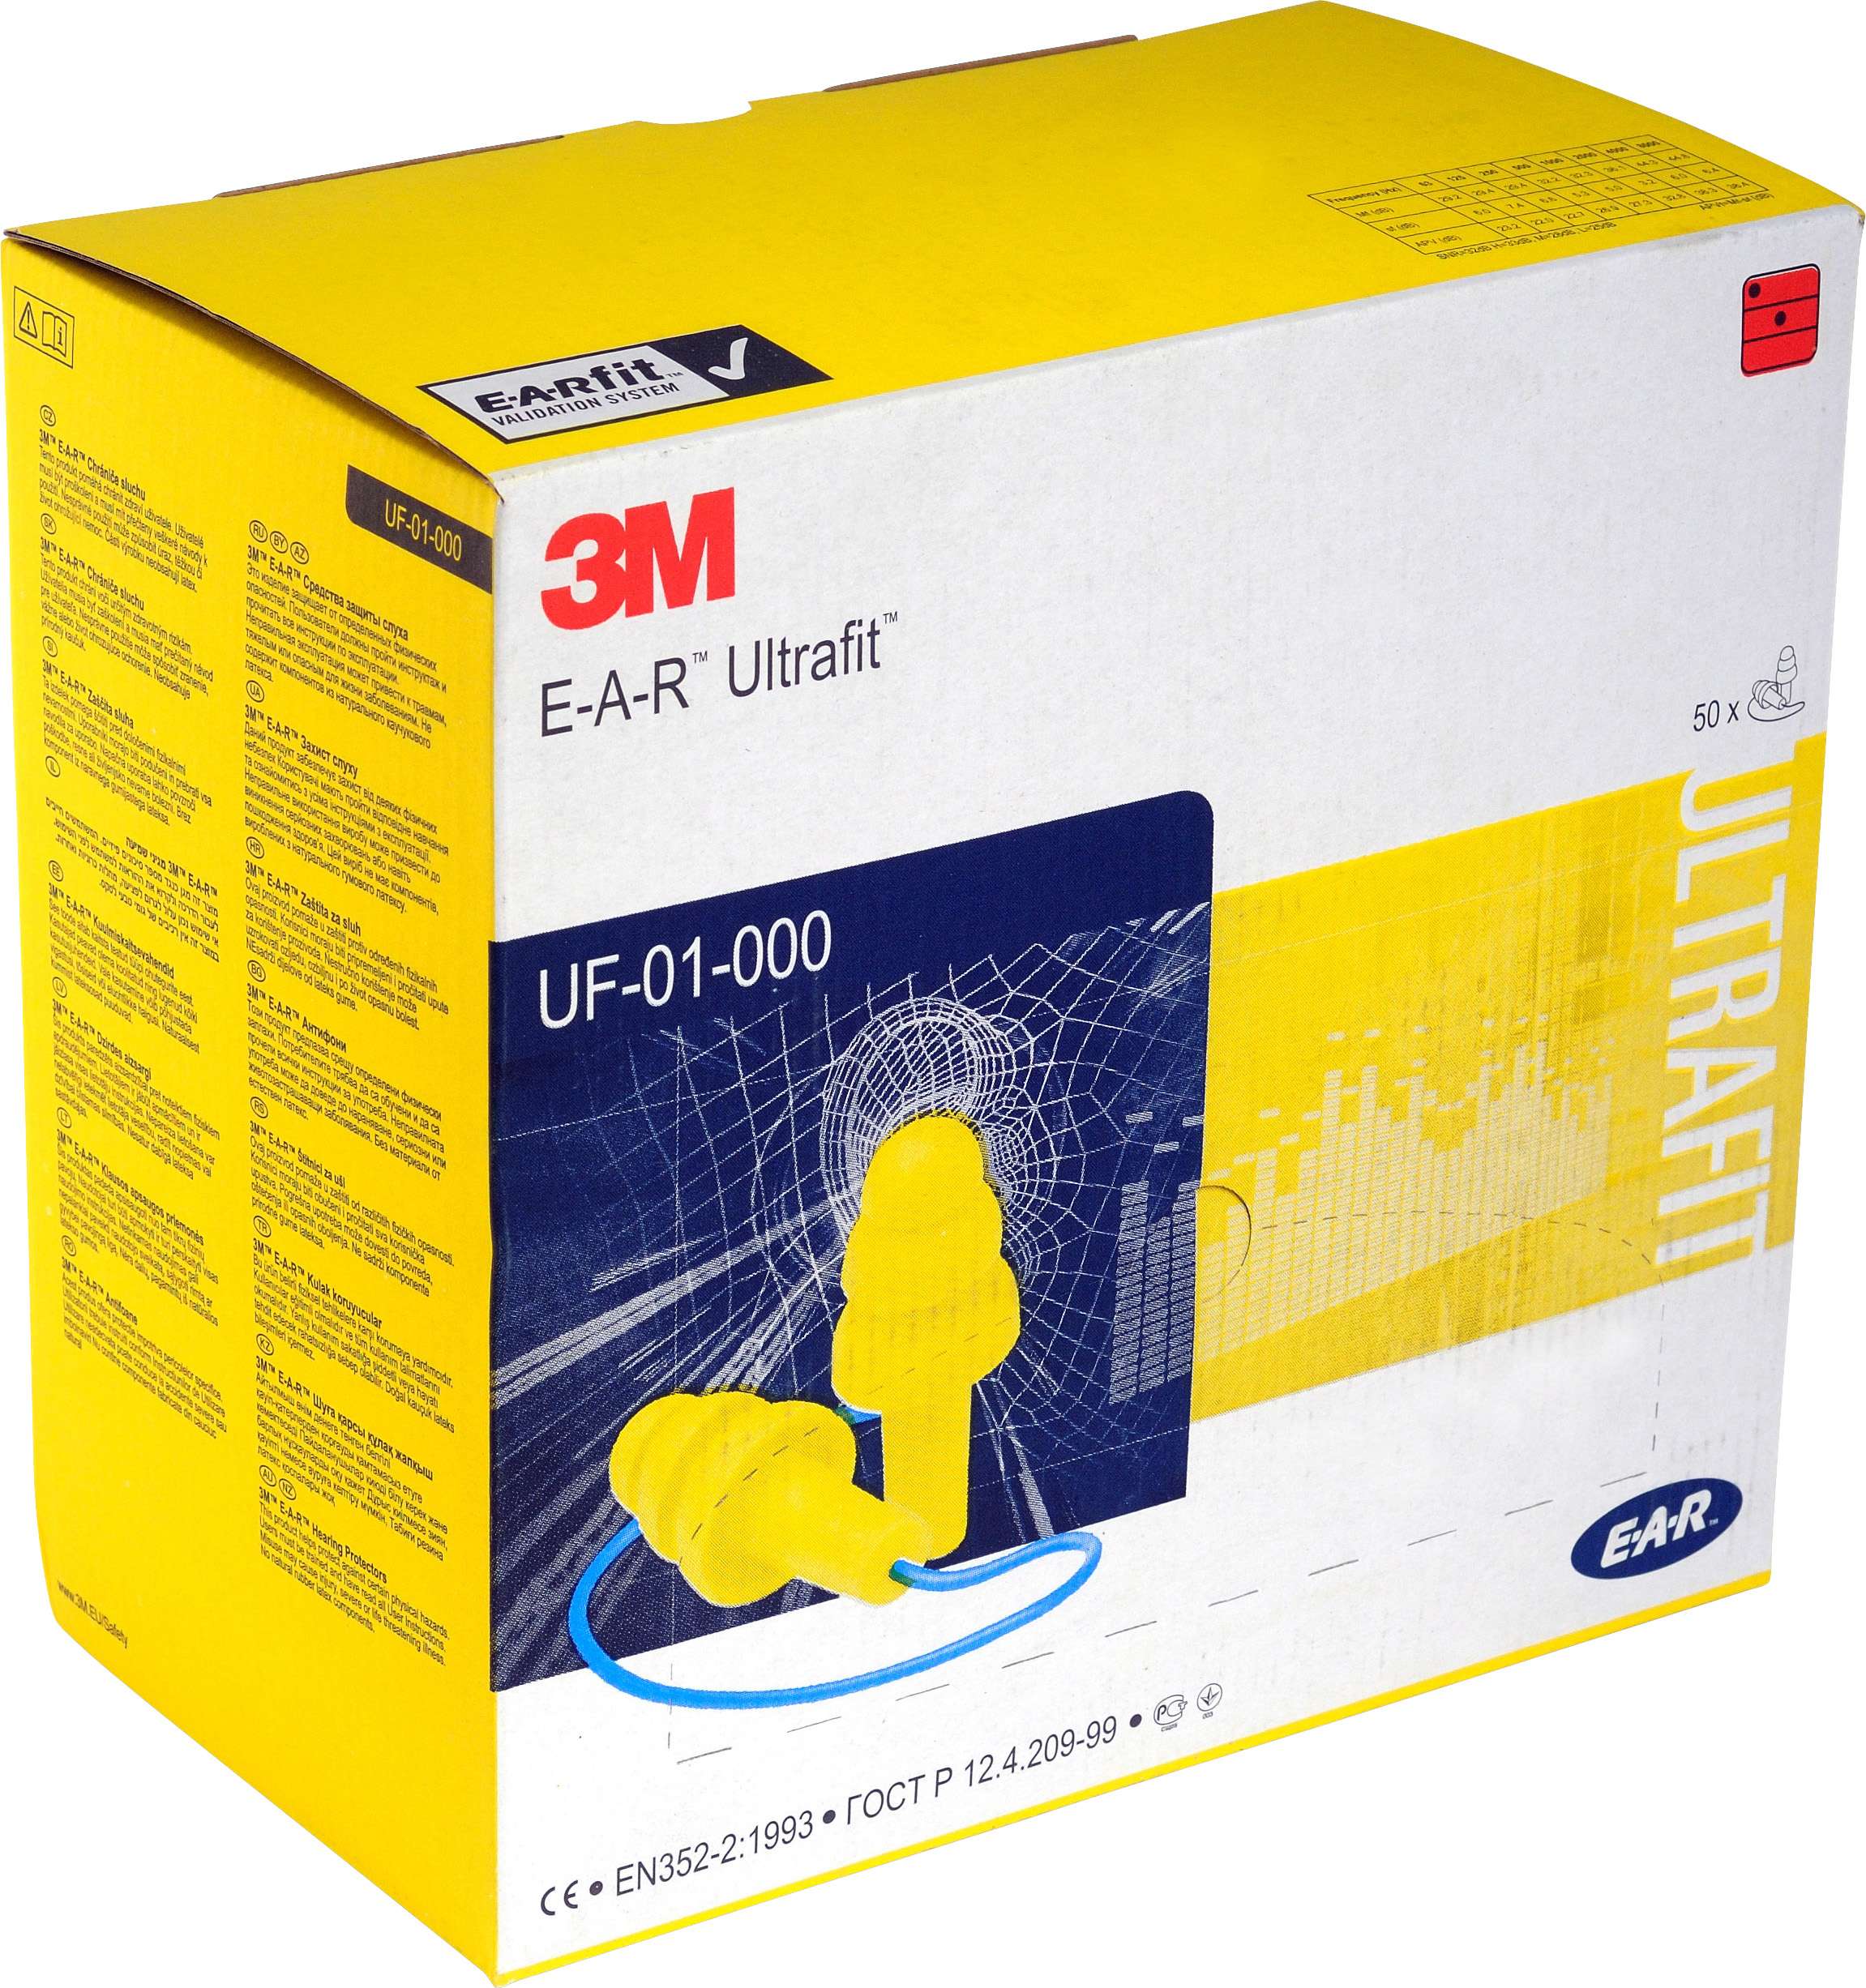 Tapones 3M SNR 32dB reutilizables E-A-R Ultrafit UF-01-000 - Pack 50